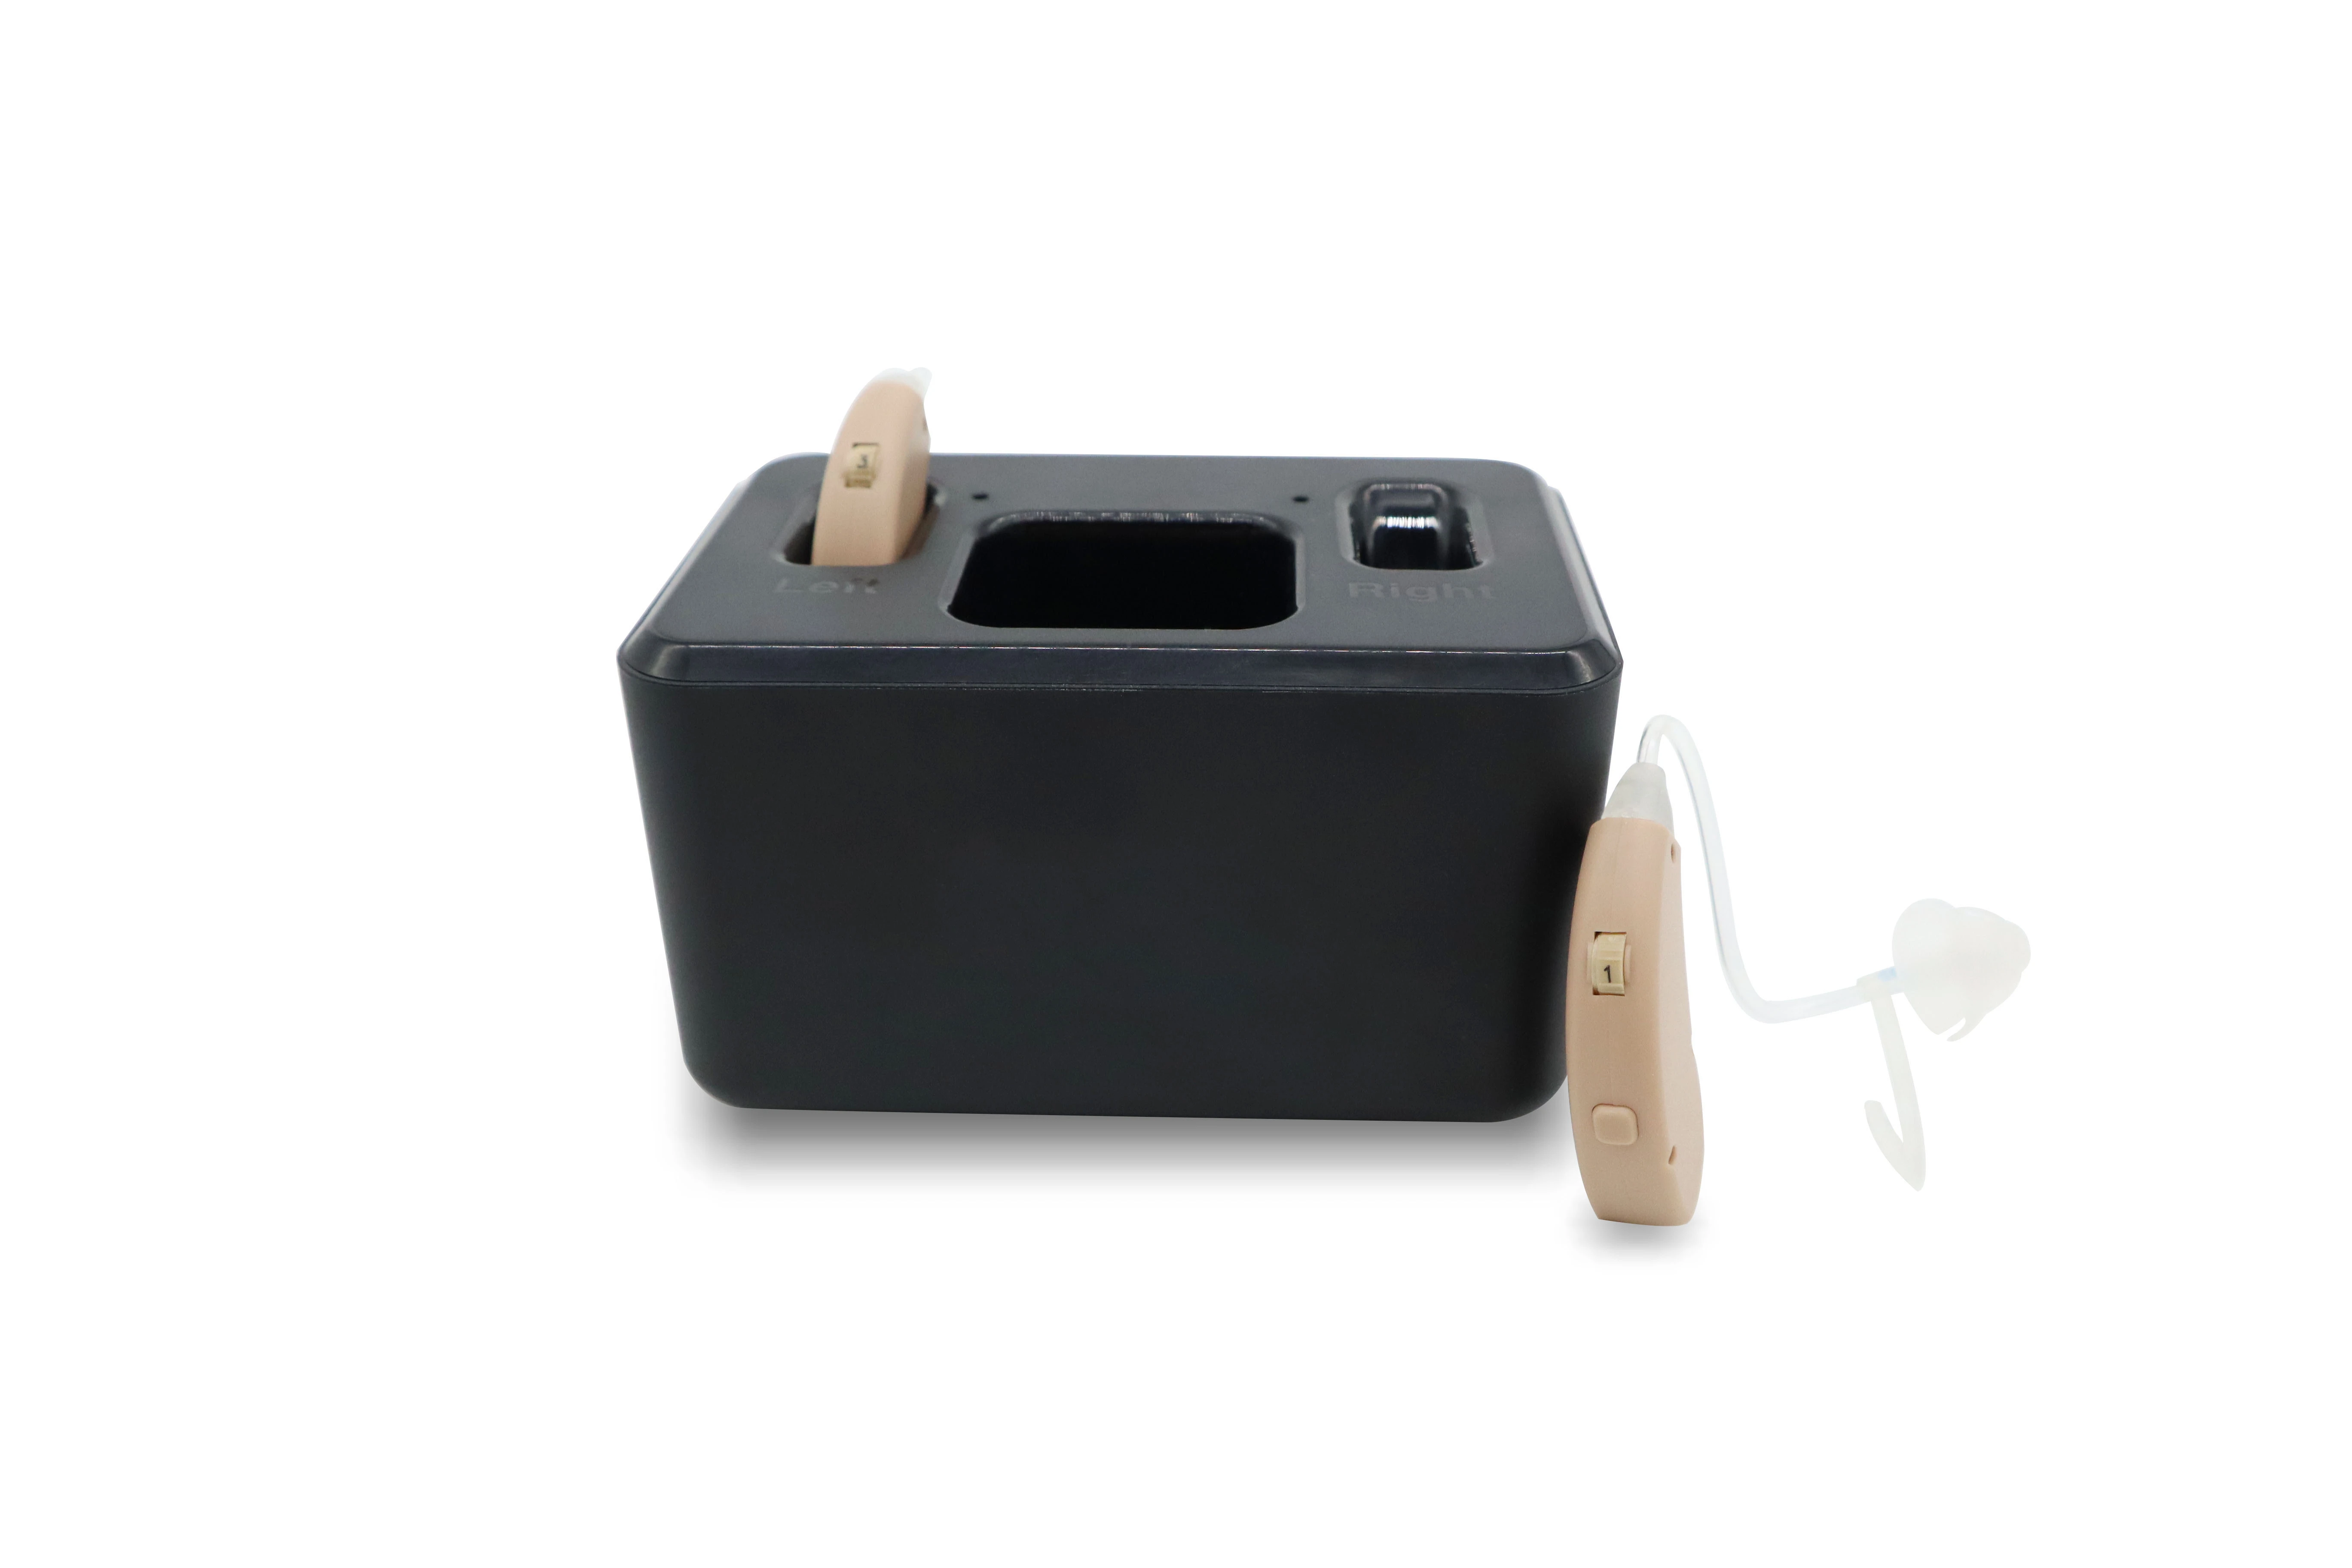 Amplifer earphone hot selling Mini BTE rechargeable Hearing aid digital